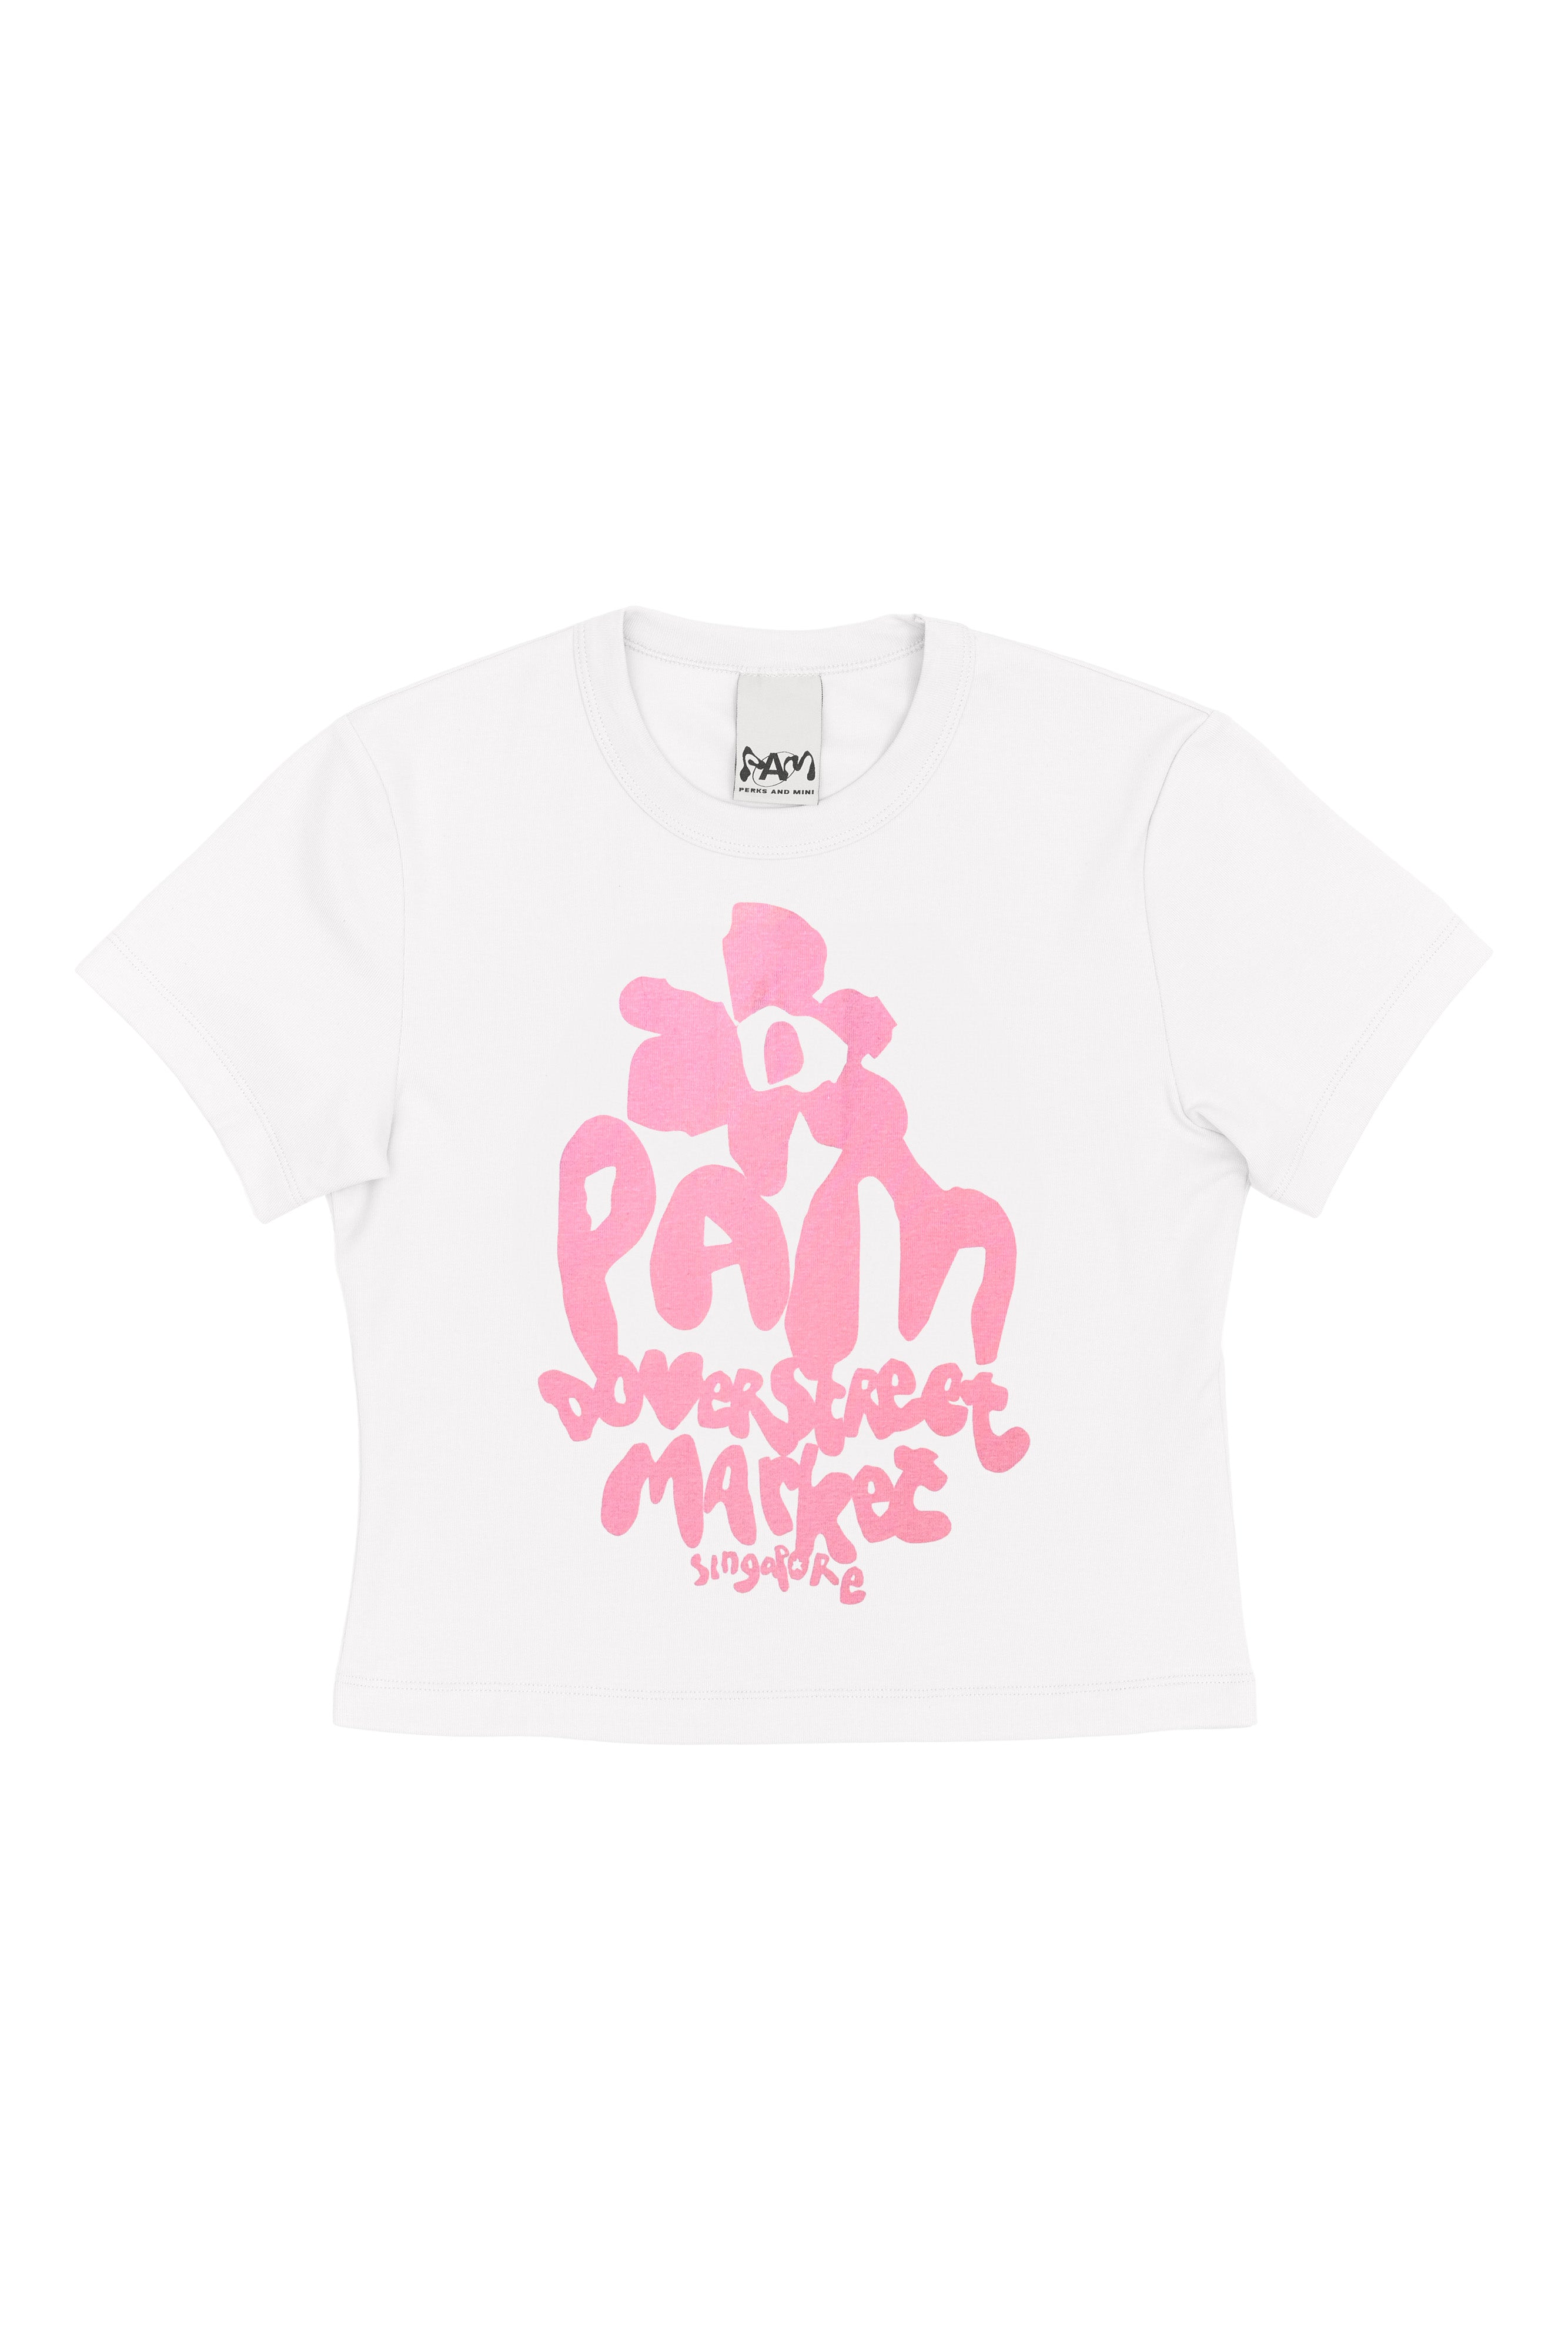 P.A.M. ONLINE STORE | Perks & Mini – P.A.M. (Perks And Mini)